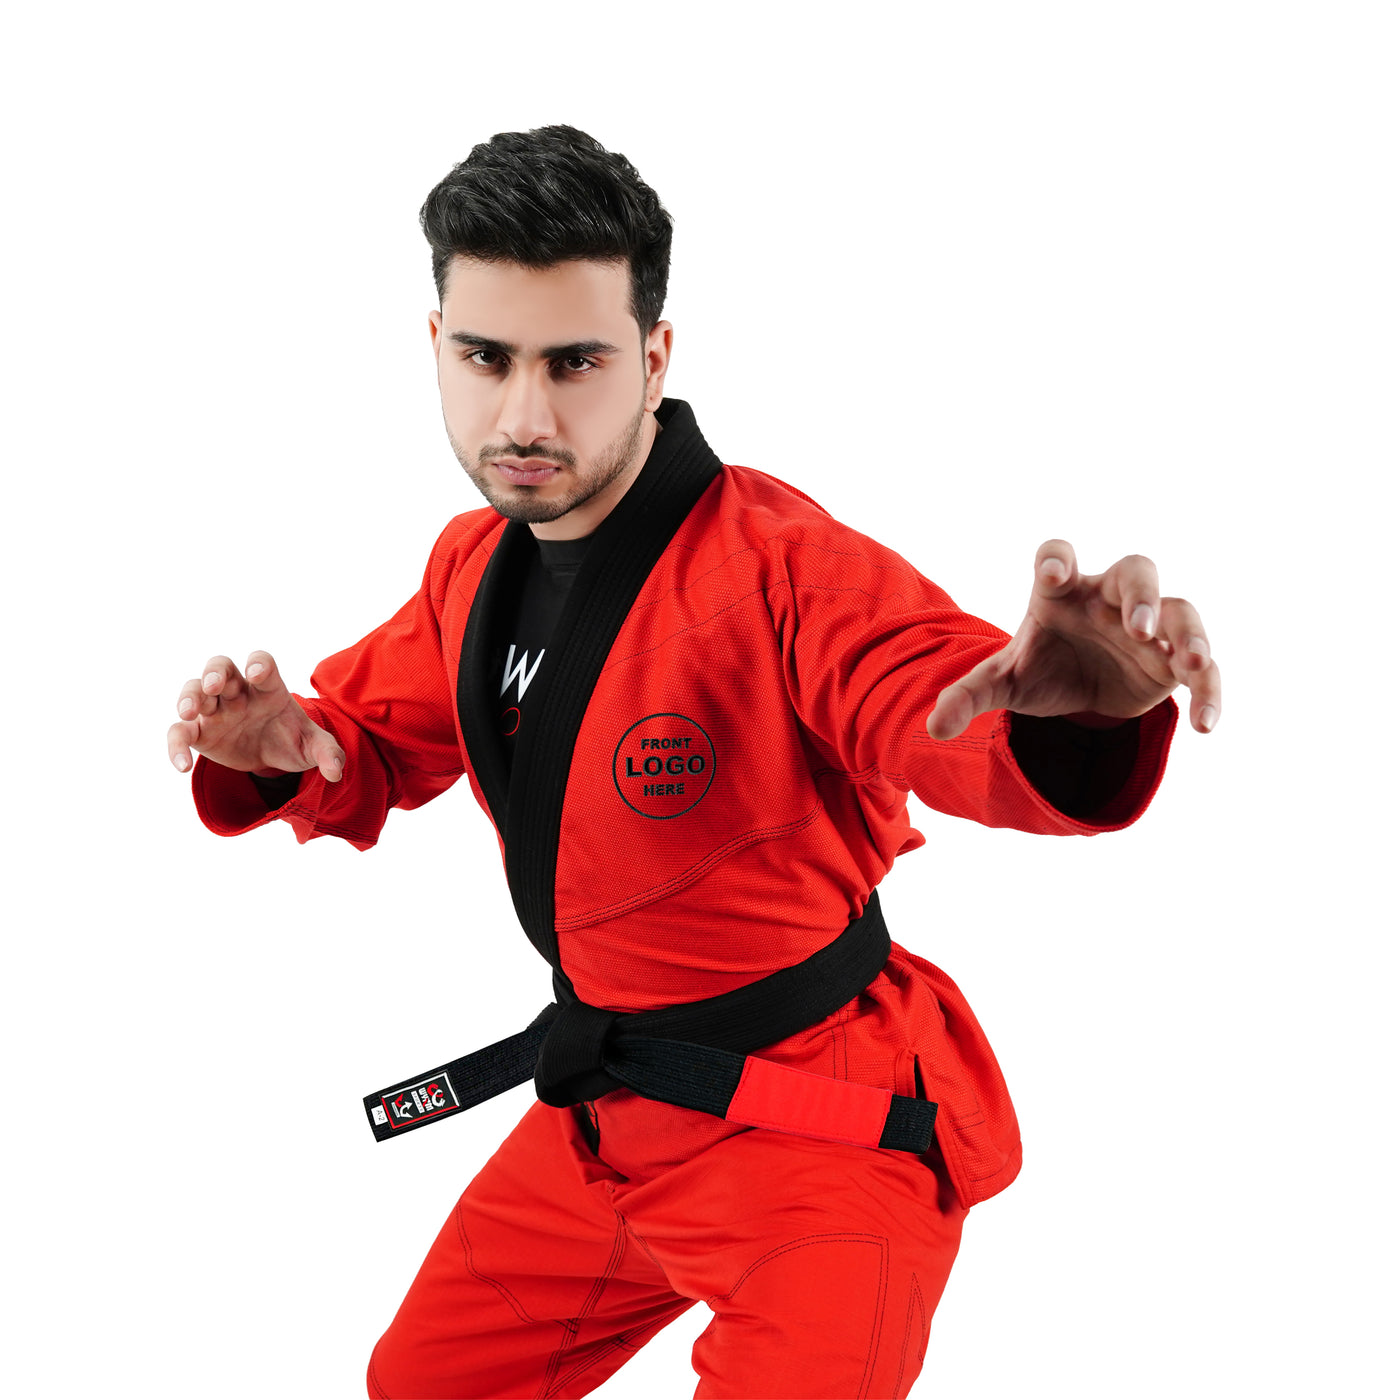 Premium Custom Red with Black Lapel Brazilian Jiu Jitsu Gi